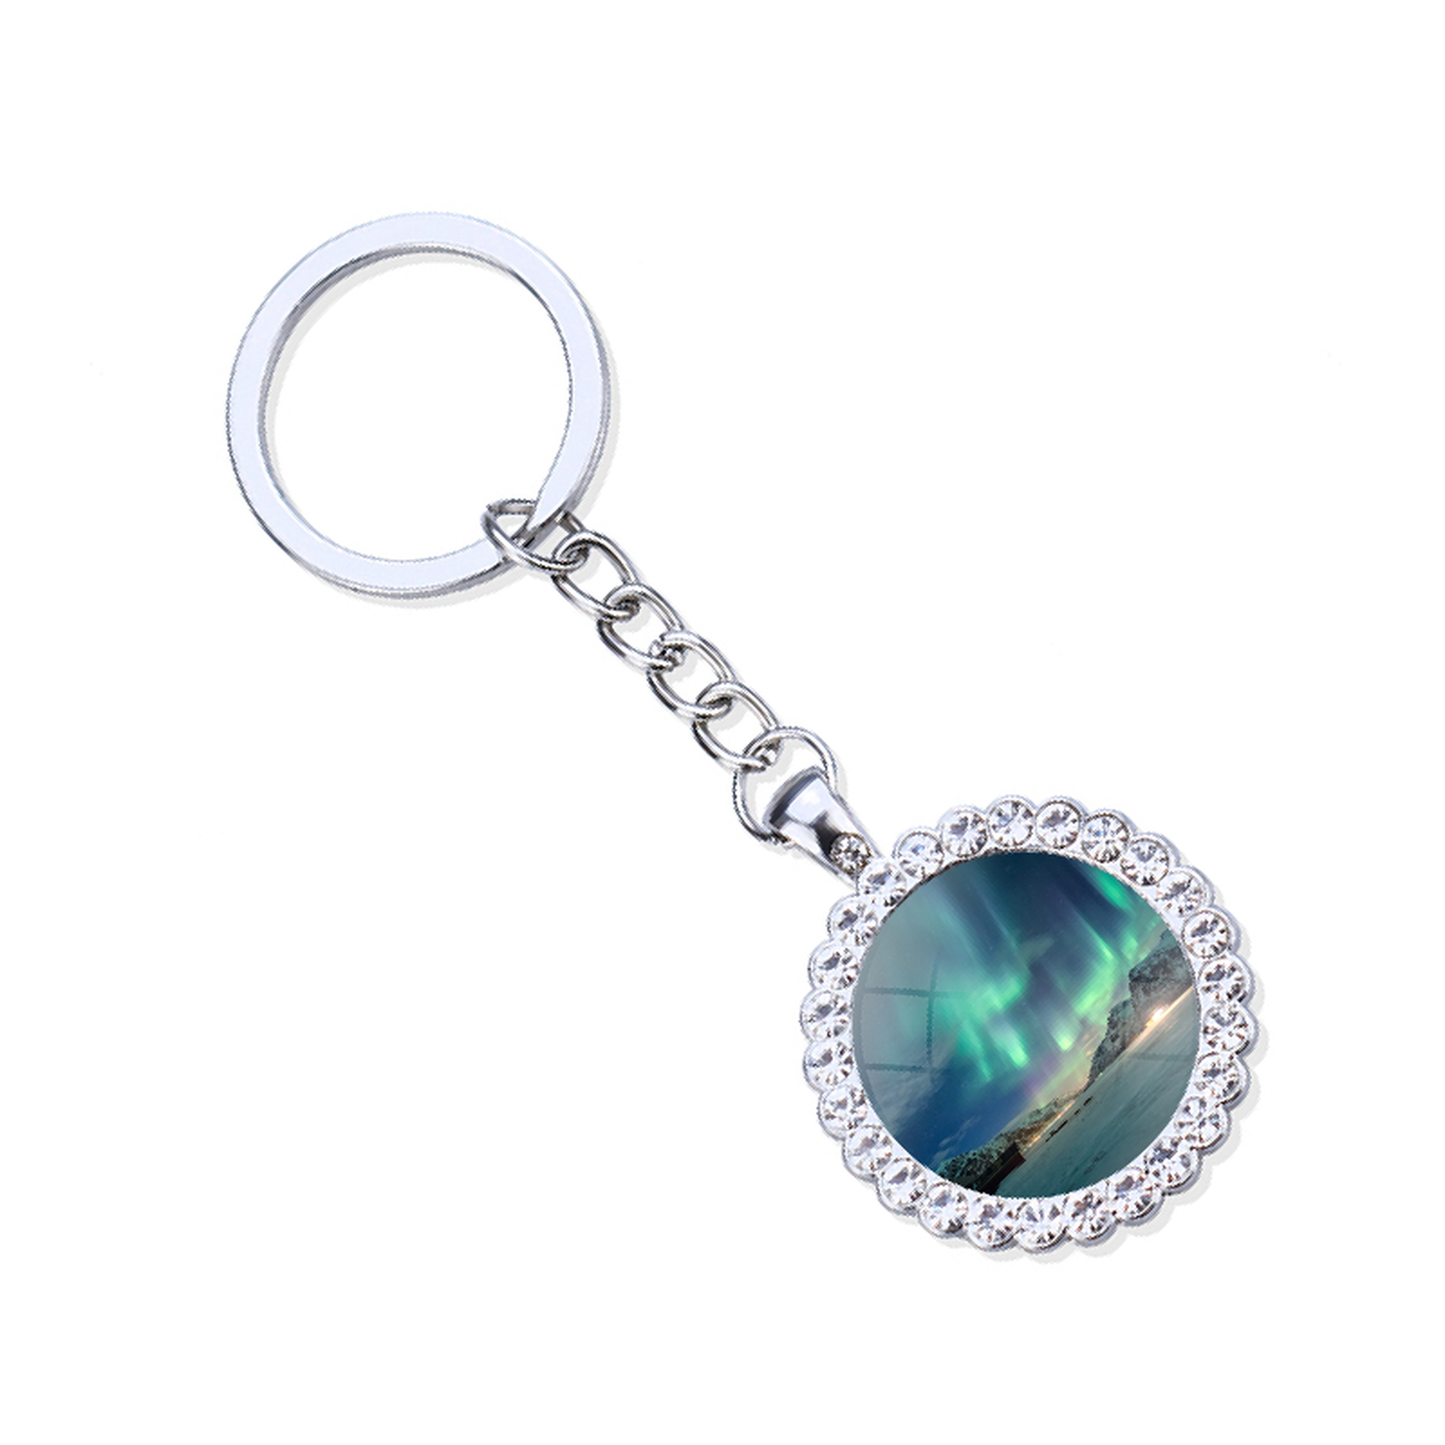 Aurora Borealis Silver Keyring - Northern Light Jewelry - Rhinestones Glass Key Chain - Perfect Aurora Lovers Gift 6